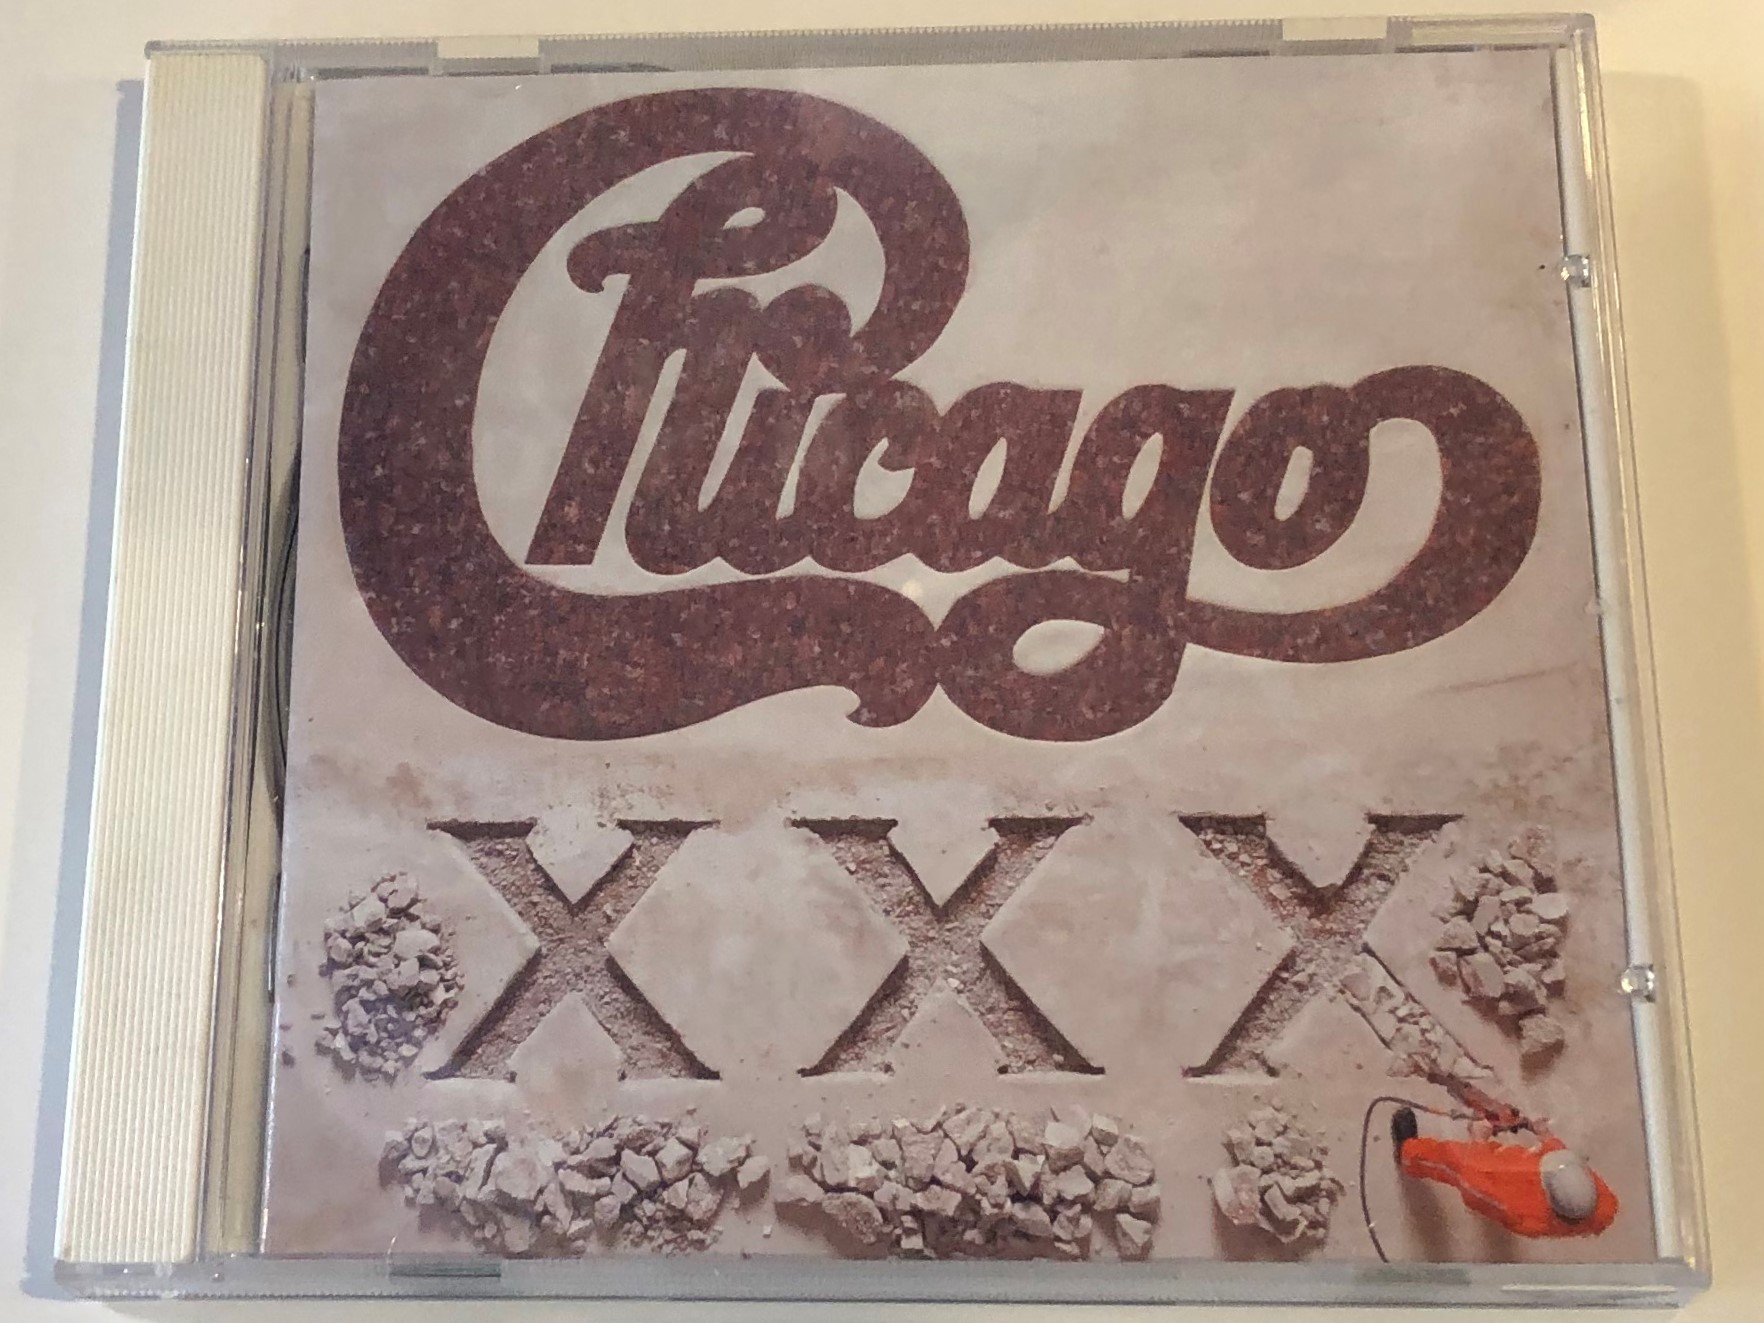 chicago-xxx-rhino-records-audio-cd-2006-8122-73362-2-1-.jpg